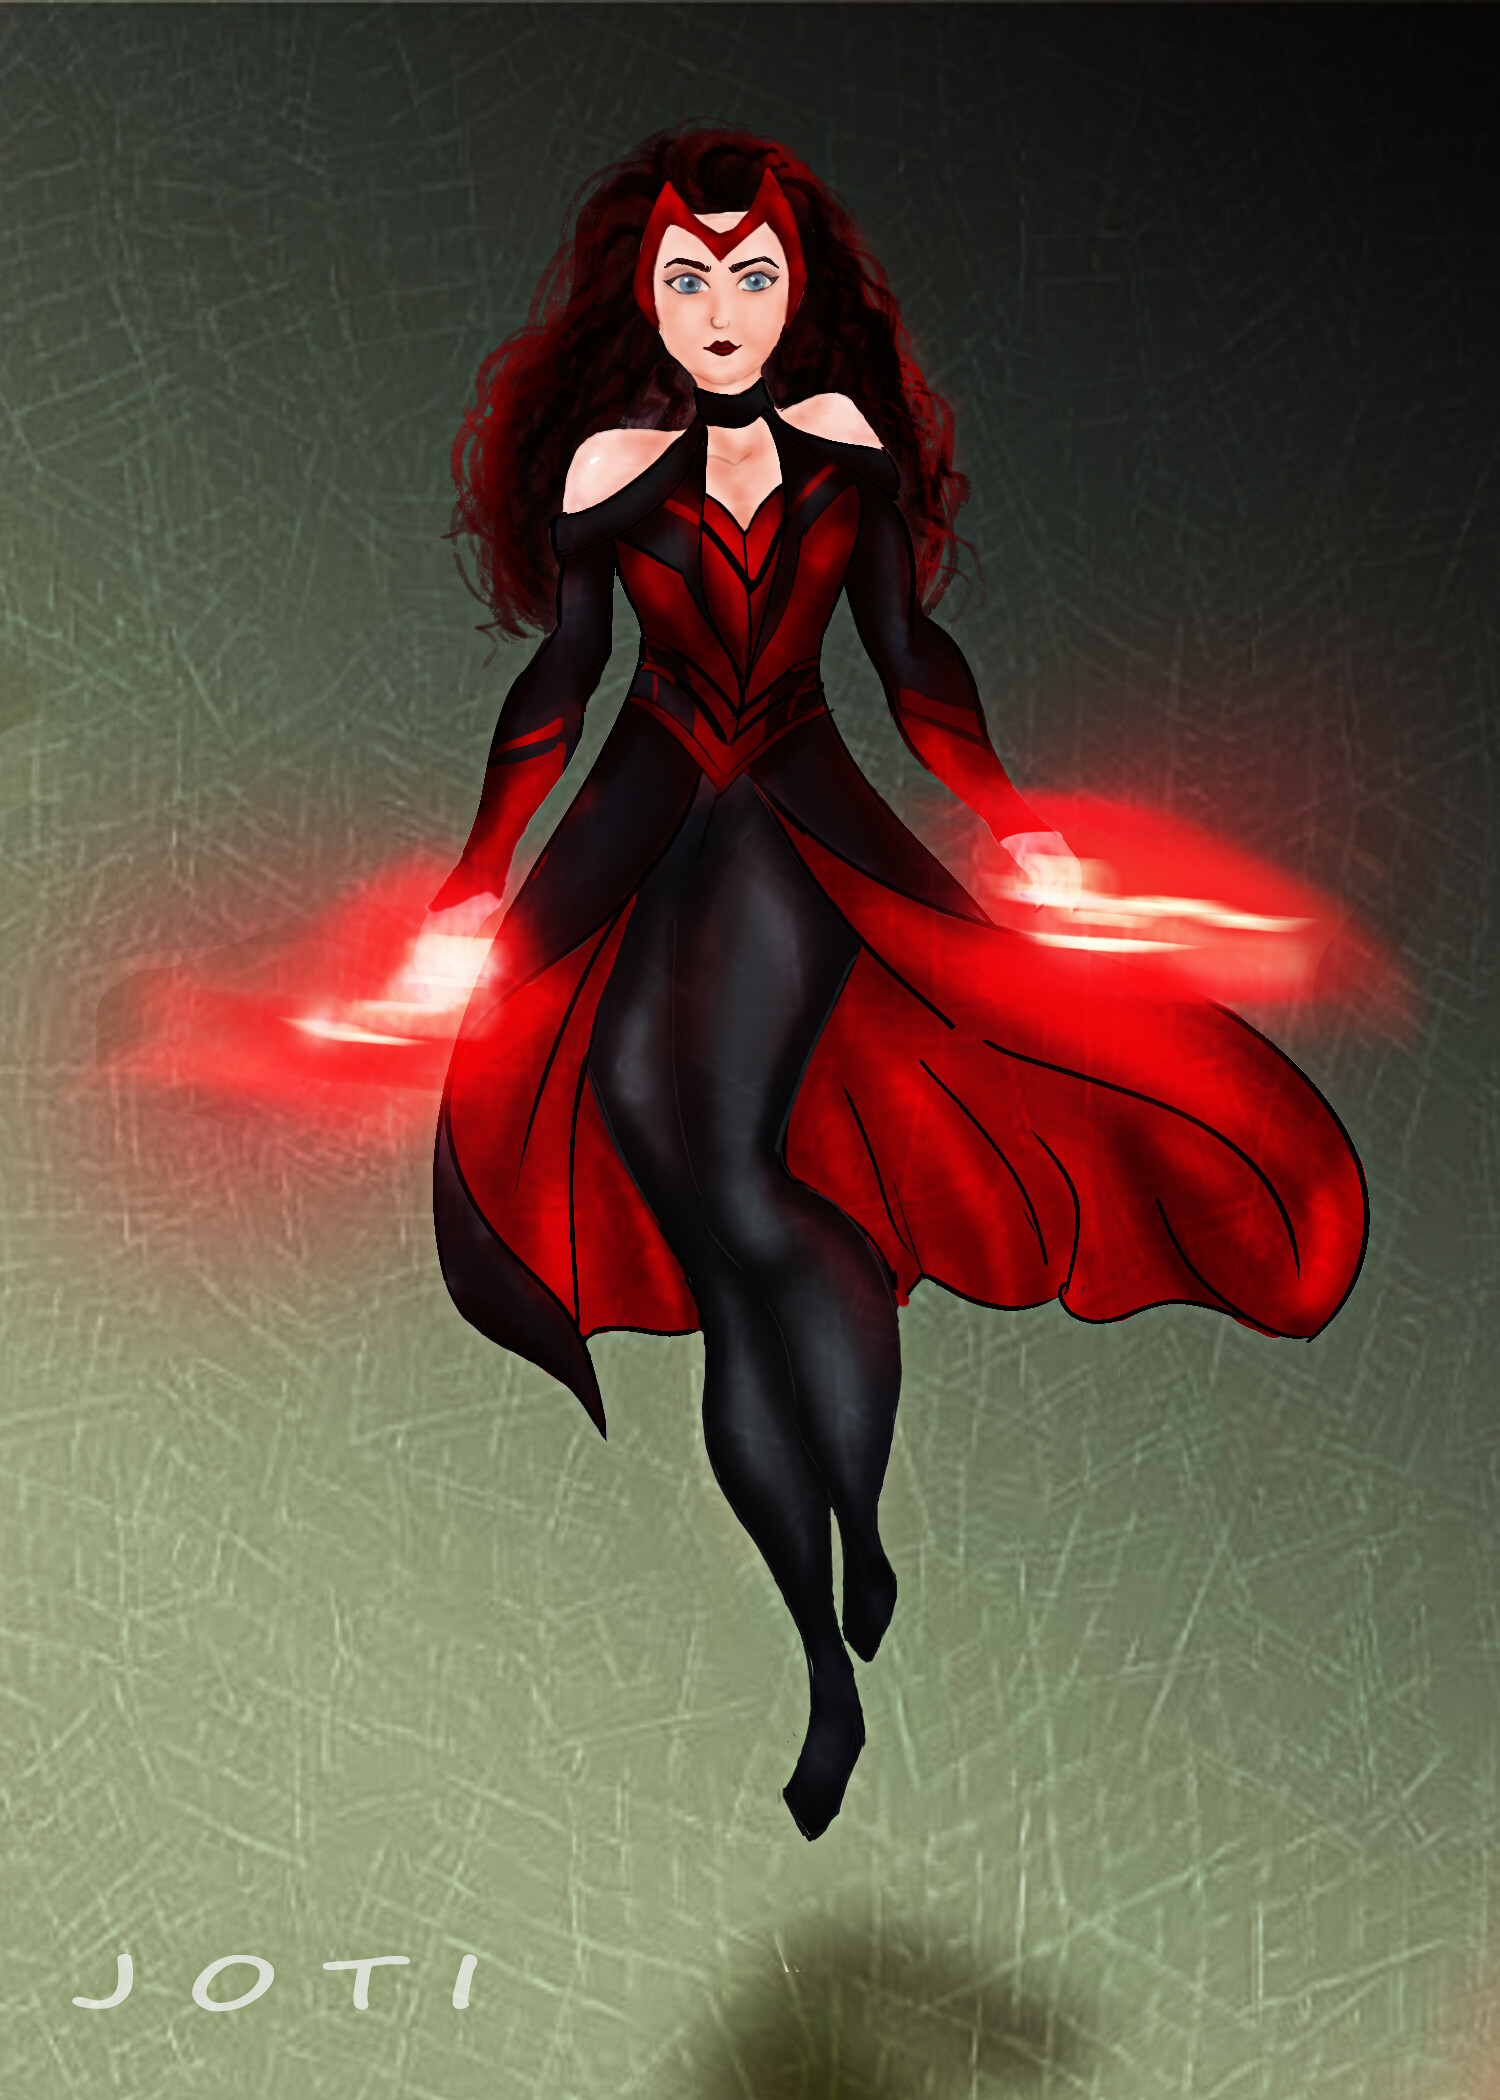 Scarlet Witch (Wanda Maximoff)